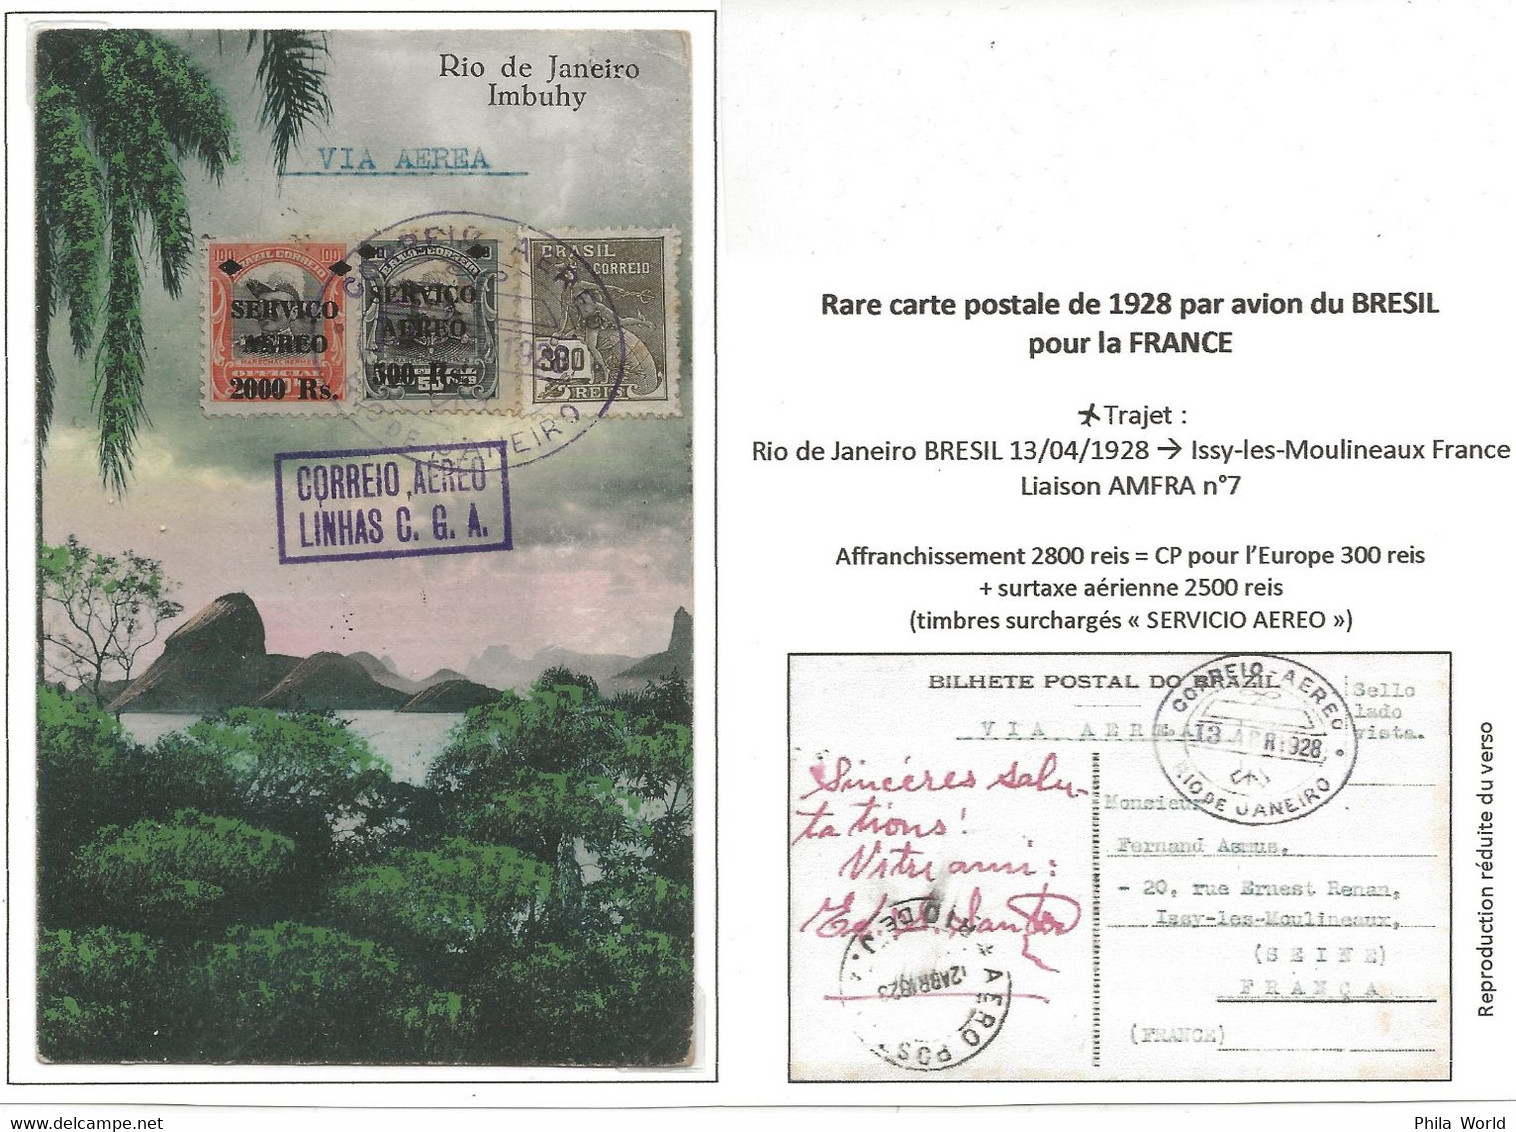 AEROPOSTALE 1928 CPA Rio Janeiro Imbuhy Vol AMFRA Bresil France CORREIO AEREO LINHAS CGA Via Aerea - Airplanes